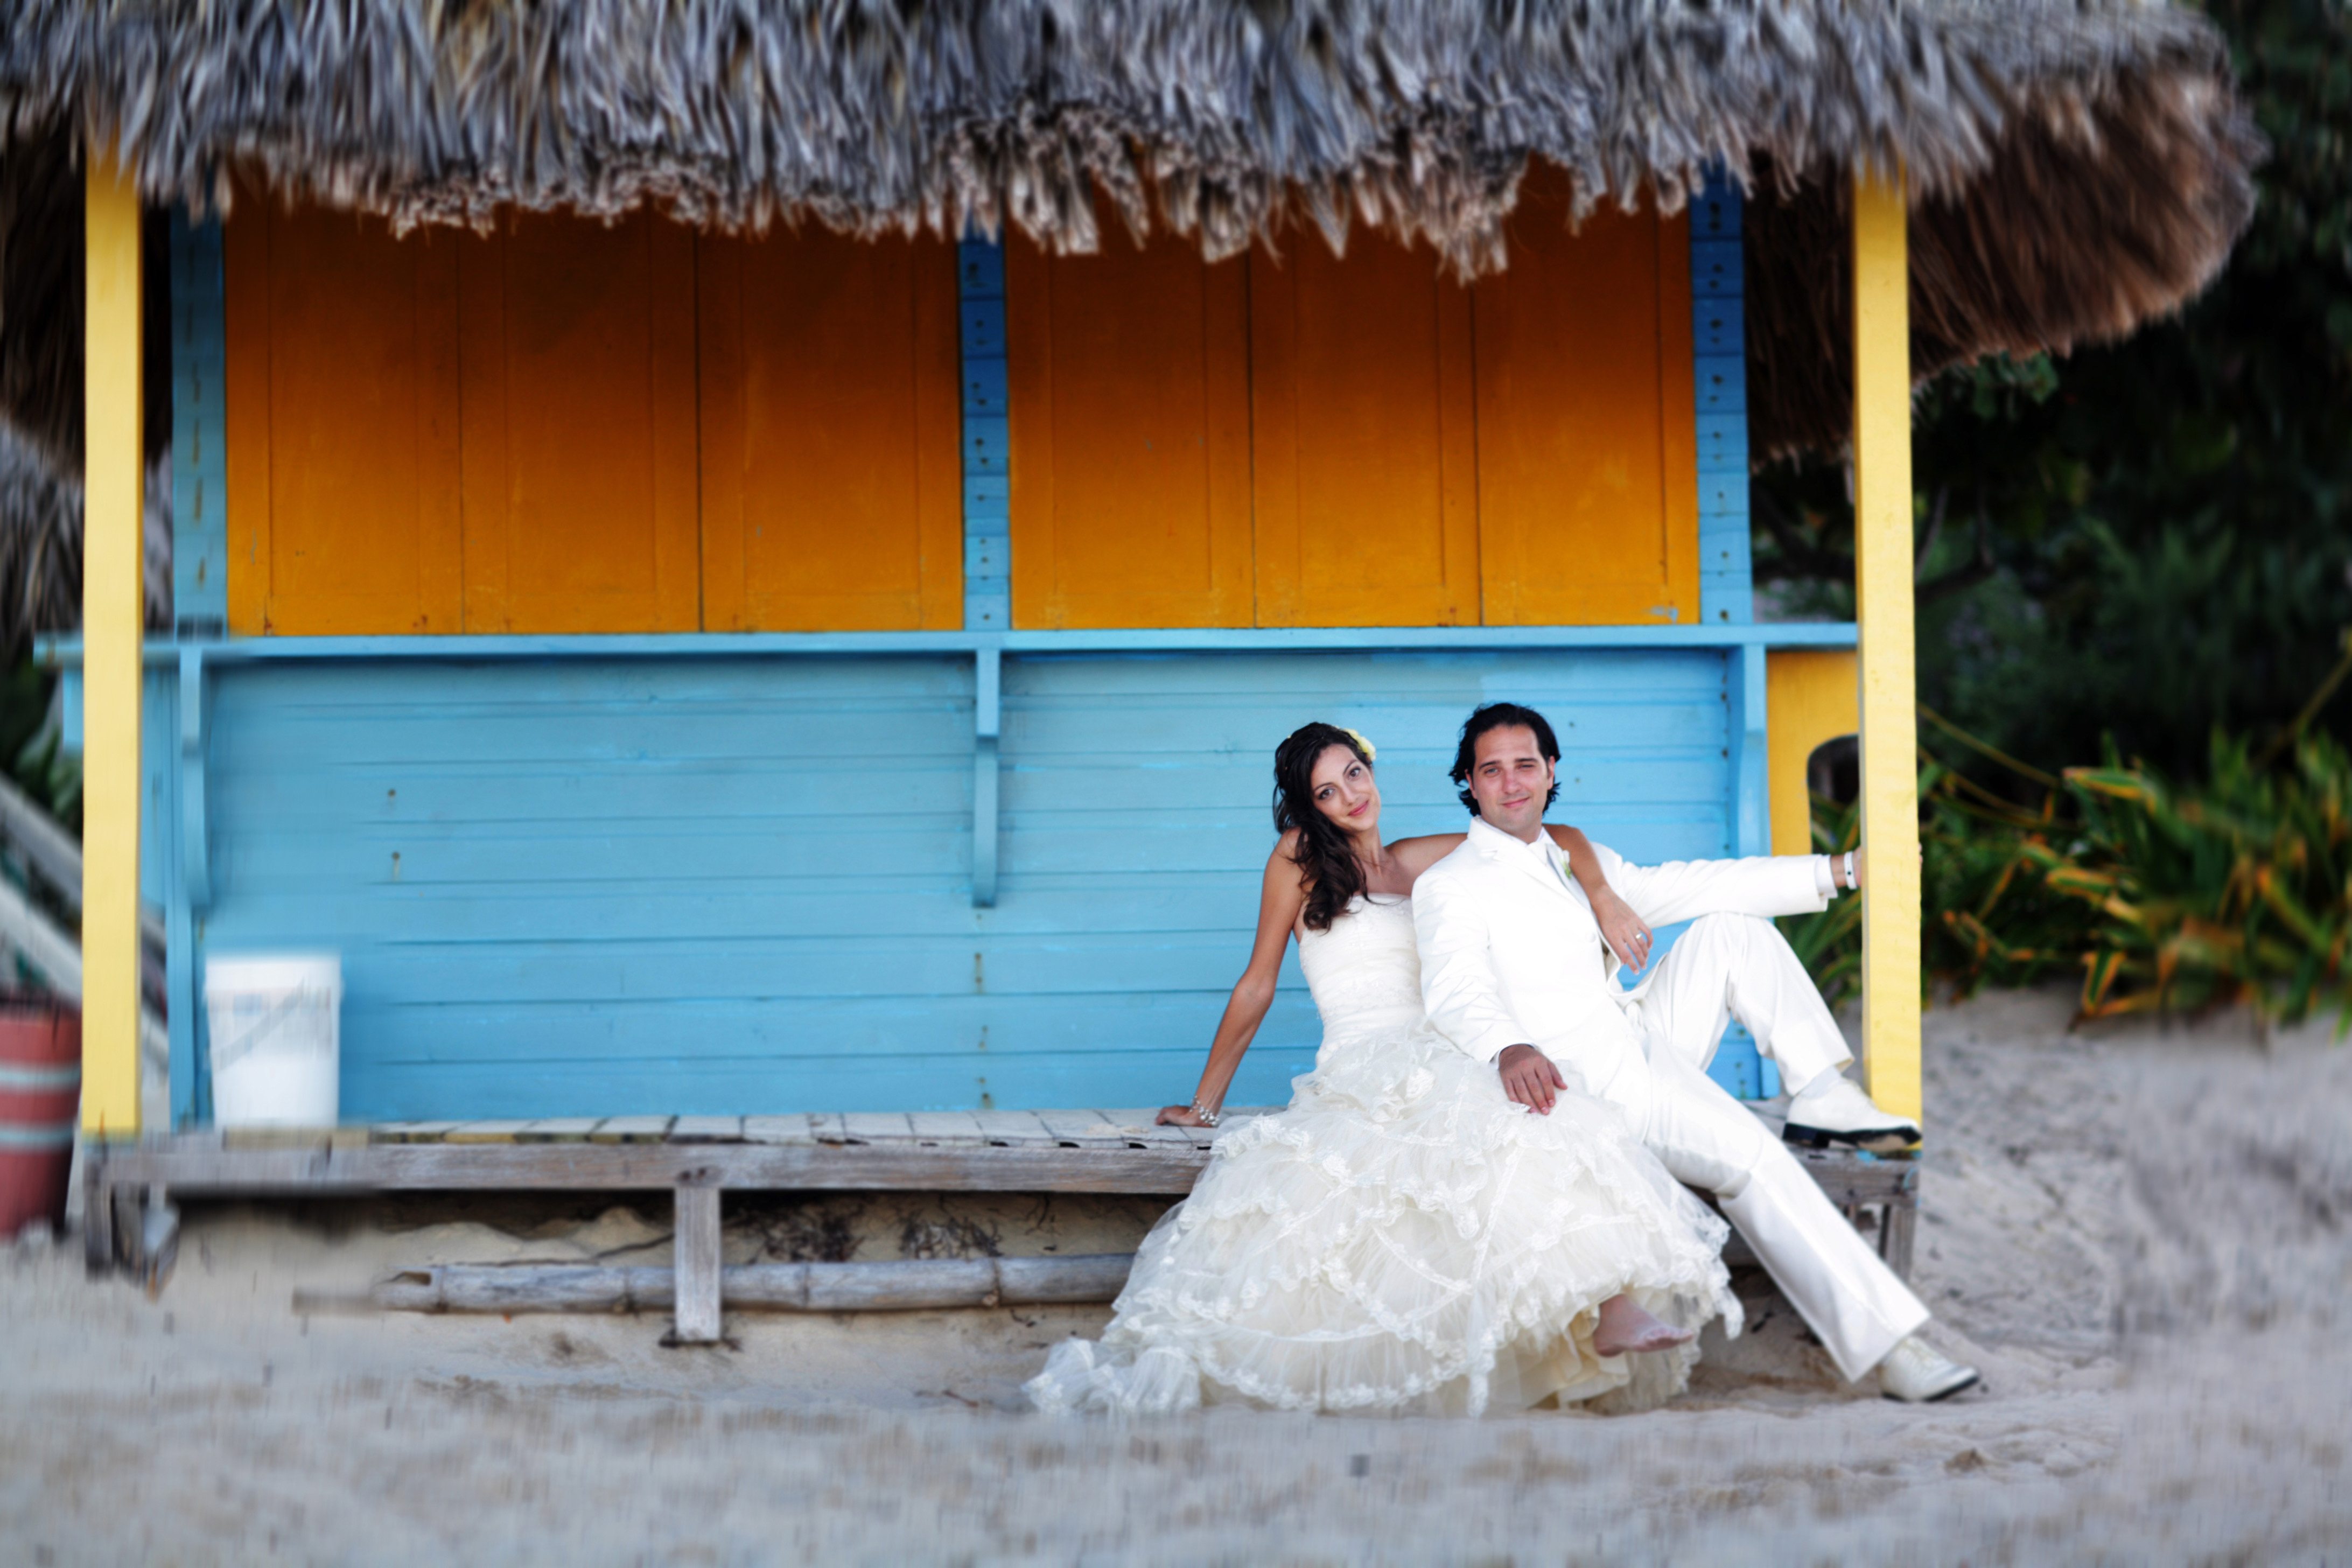 Susana and Gerardo on their wedding day